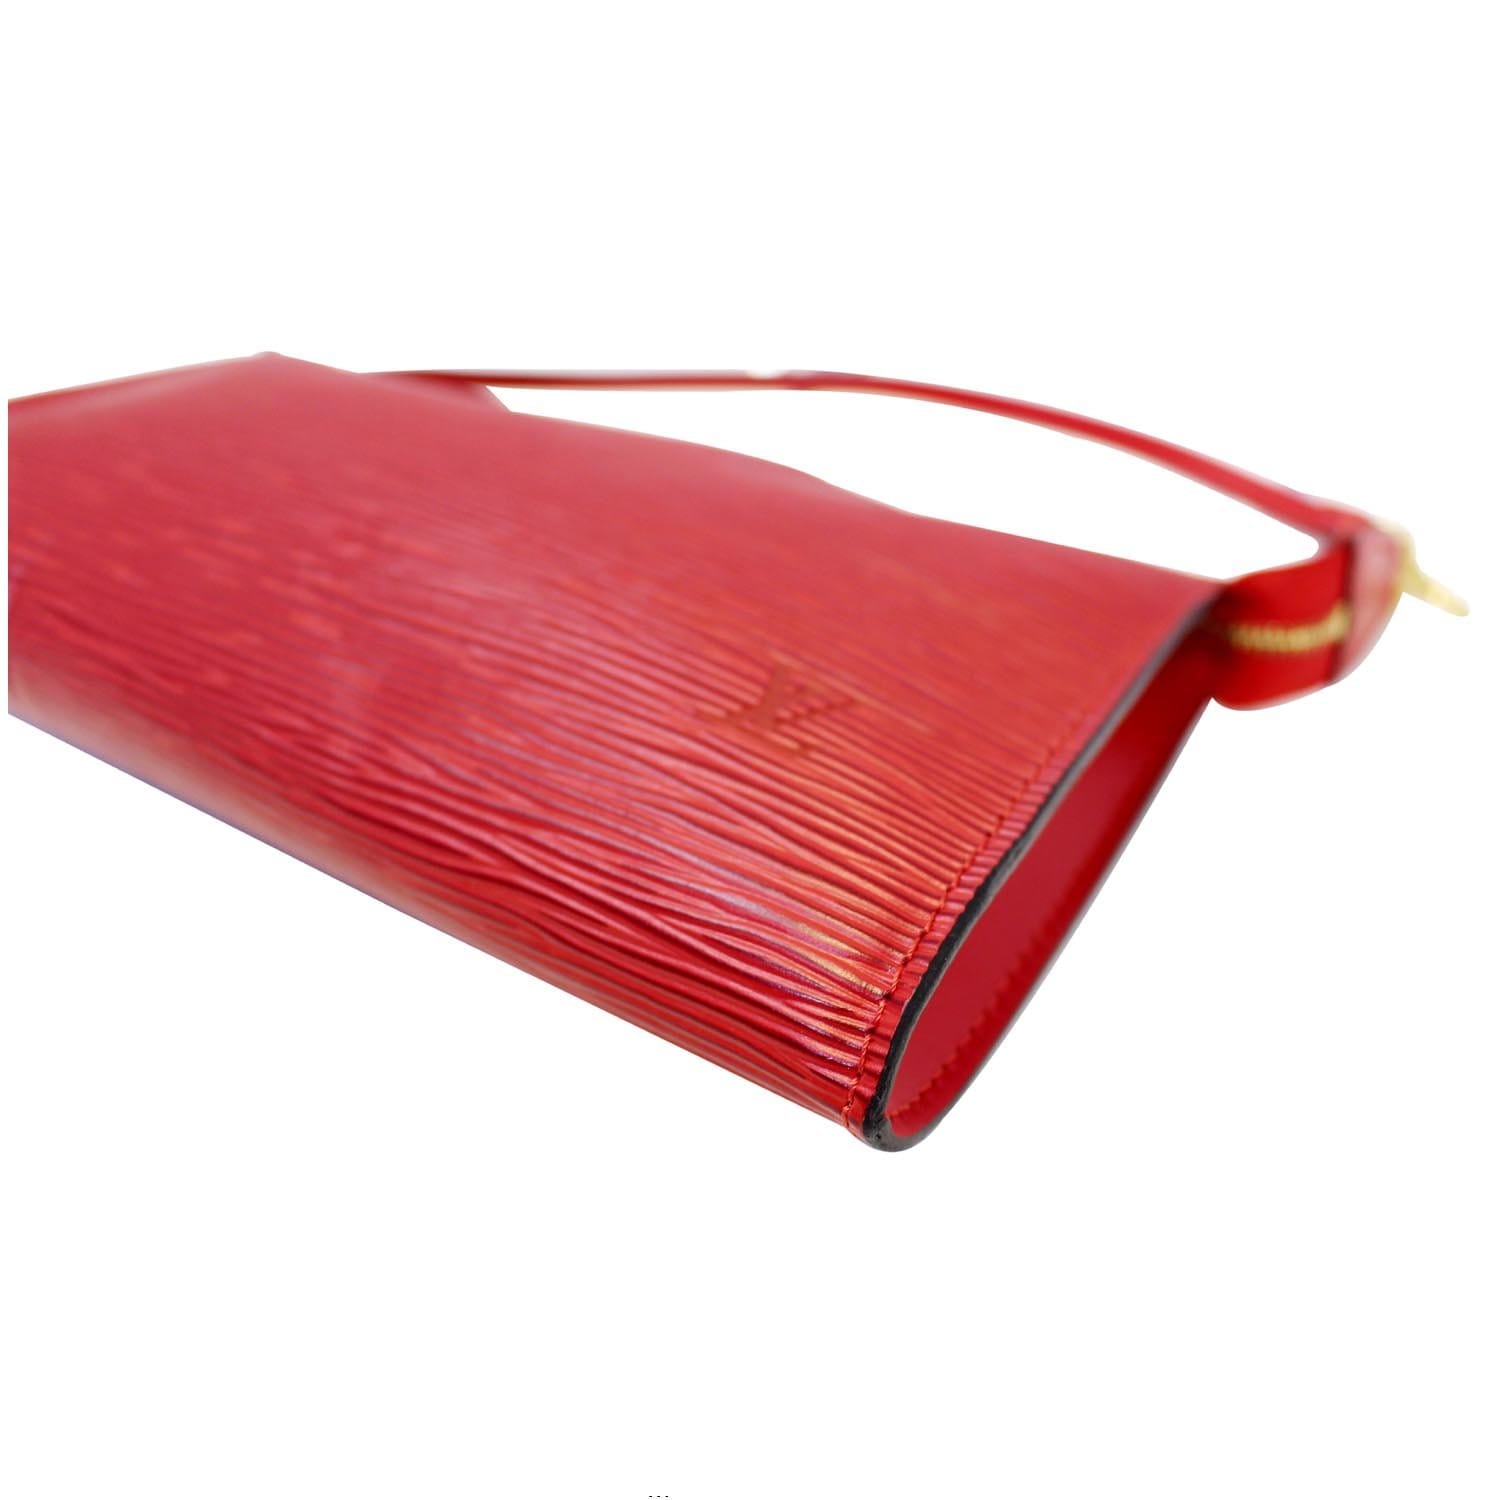 Louis Vuitton Pochette Accessoire in Red Epi leather – The Hosta